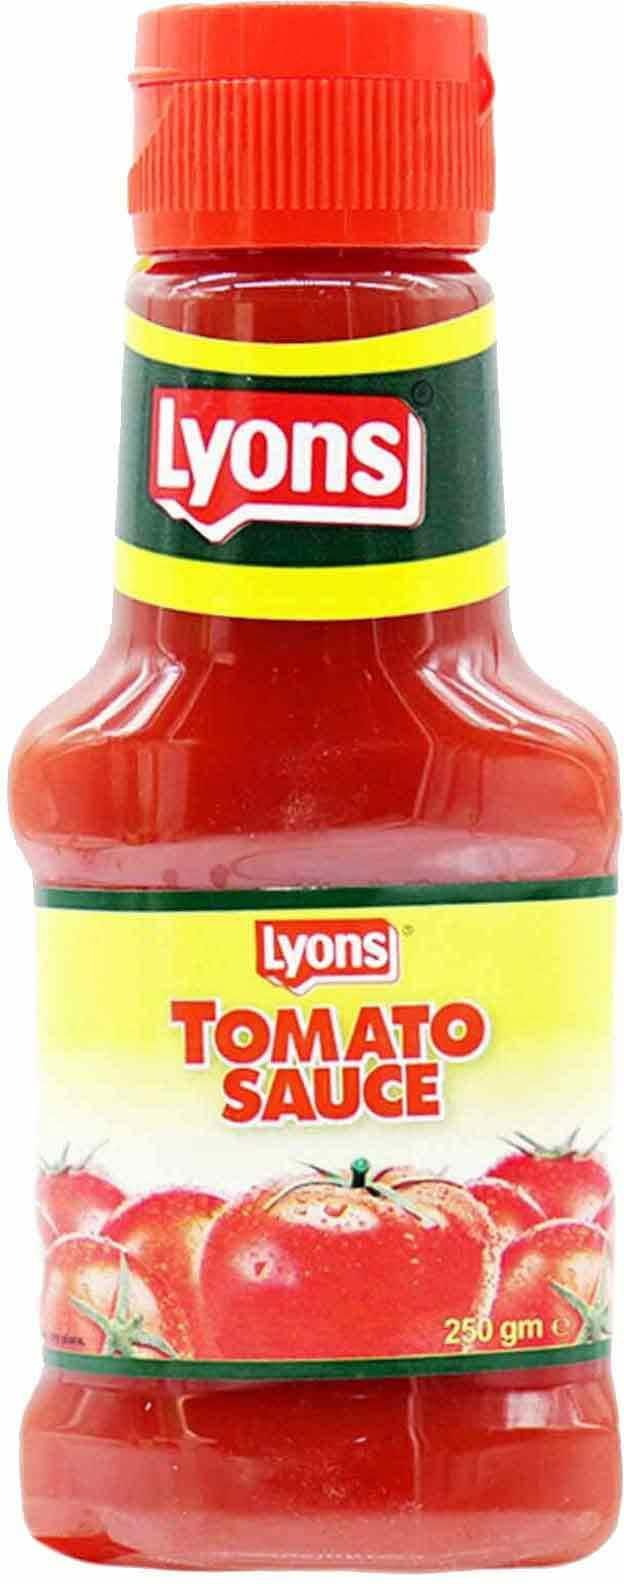 Lyons Tomato Sauce 250g